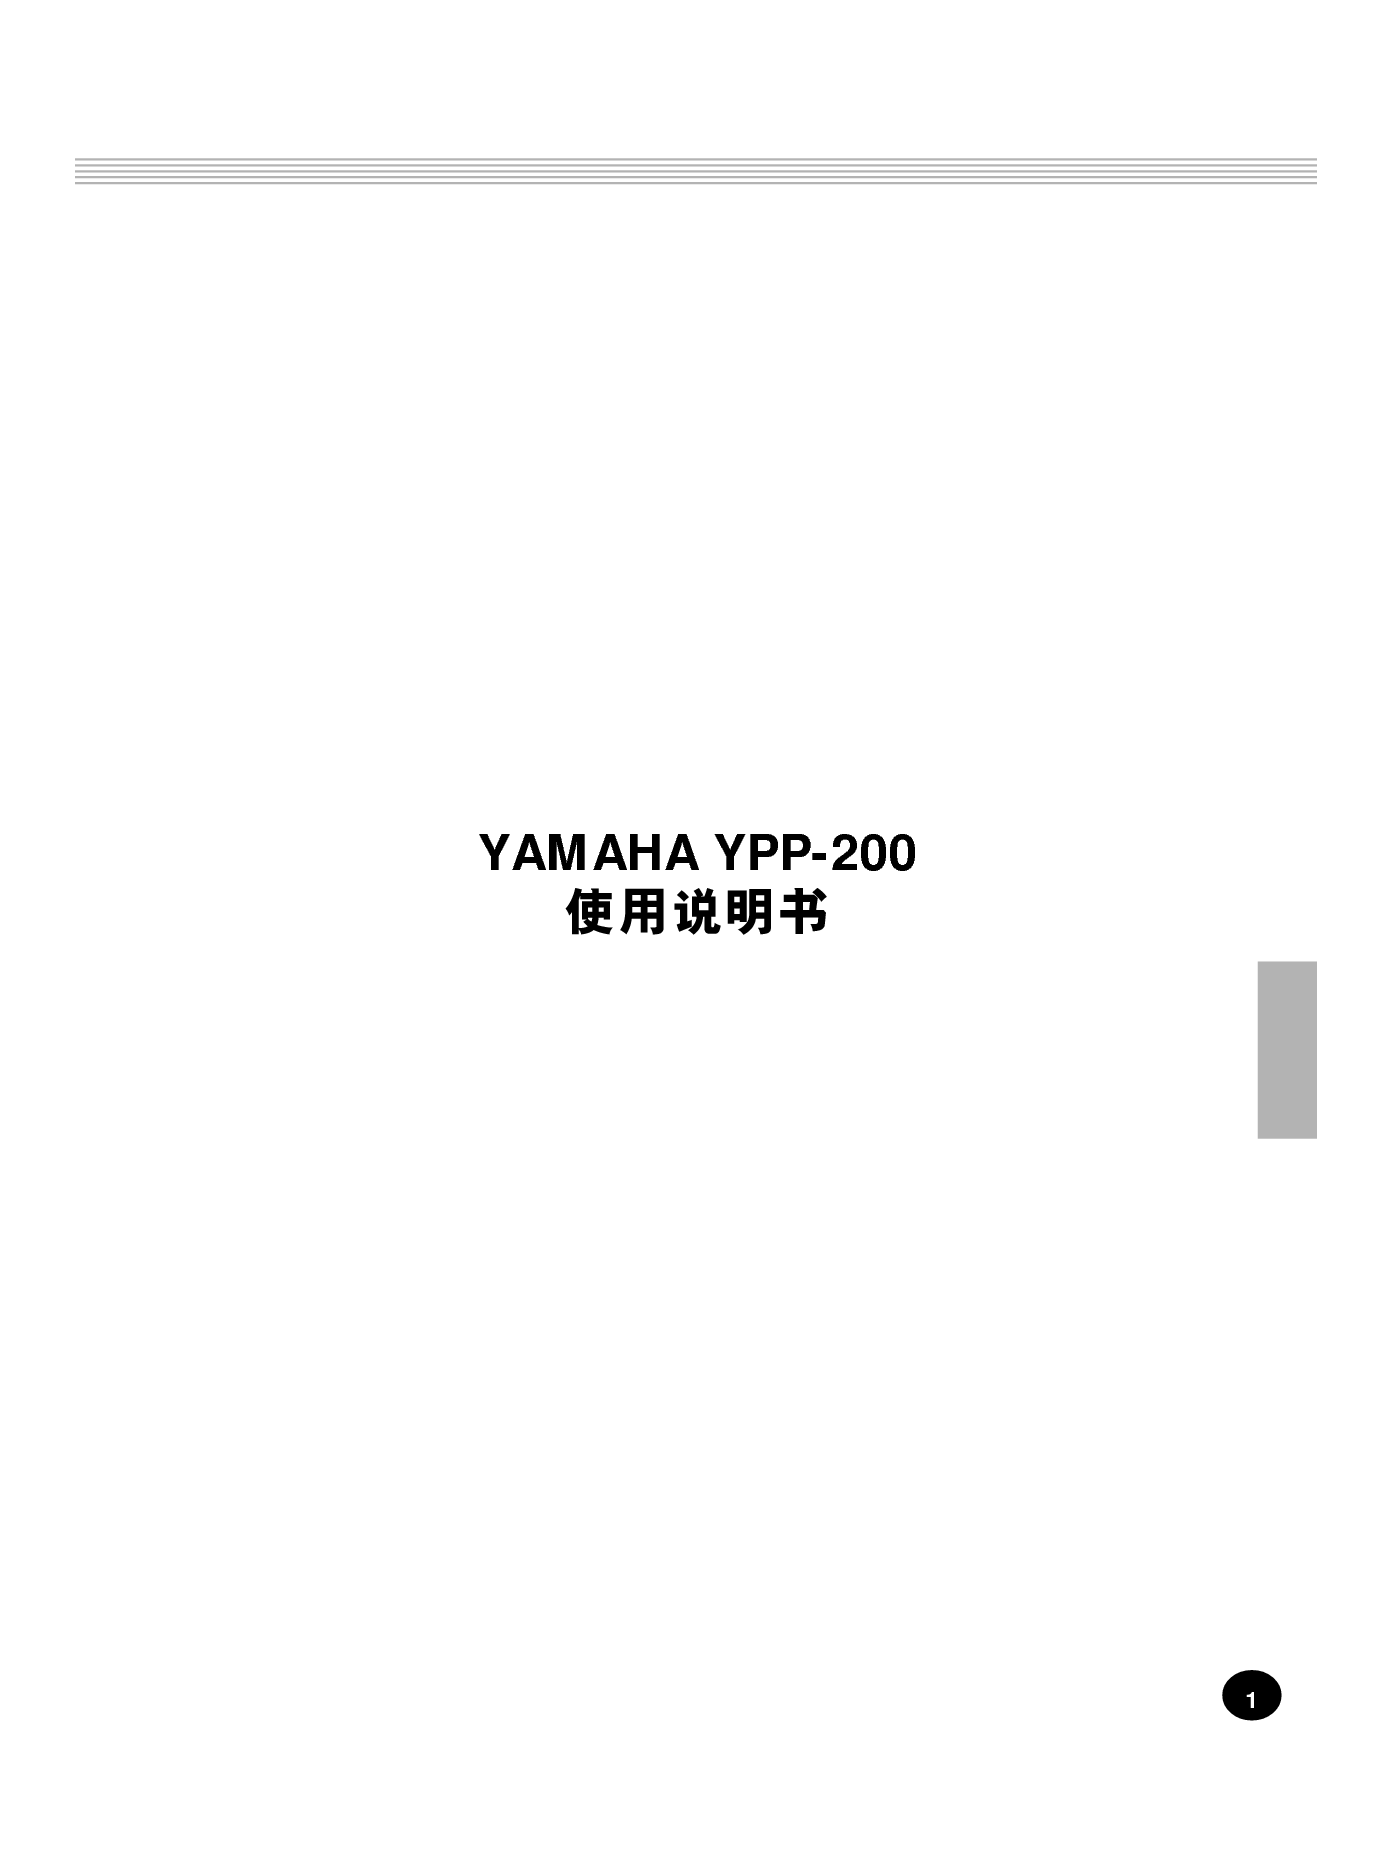 雅马哈 Yamaha YPP-200 使用说明书 封面